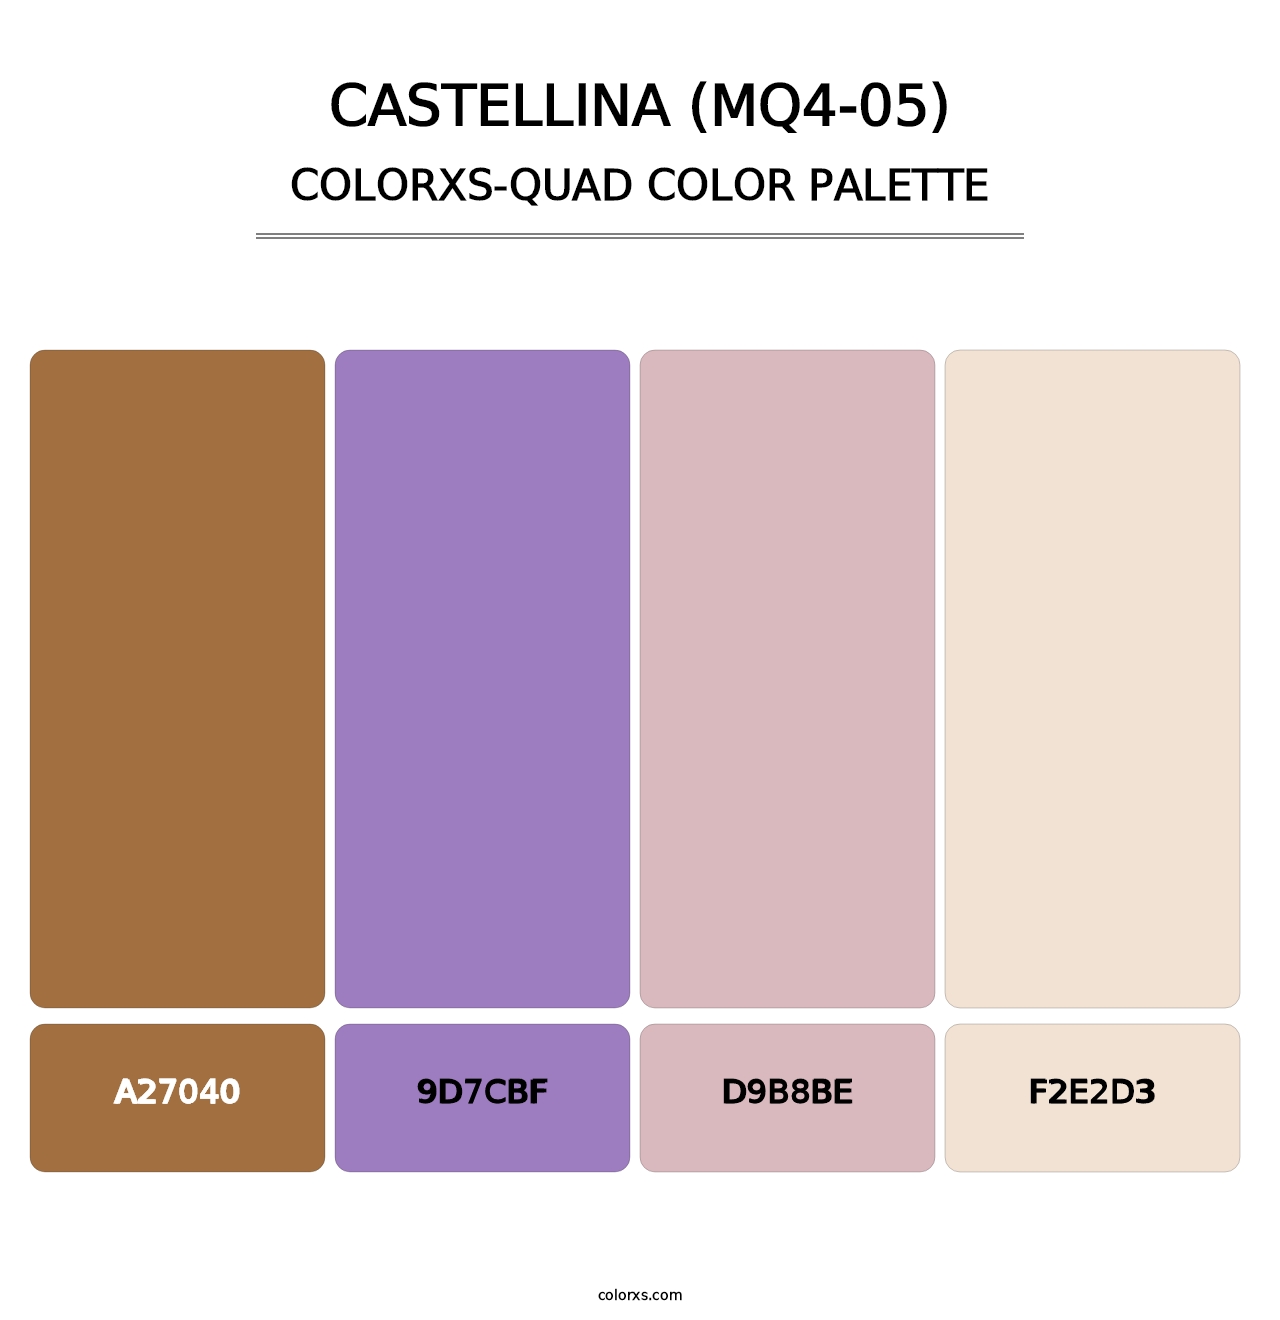 Castellina (MQ4-05) - Colorxs Quad Palette